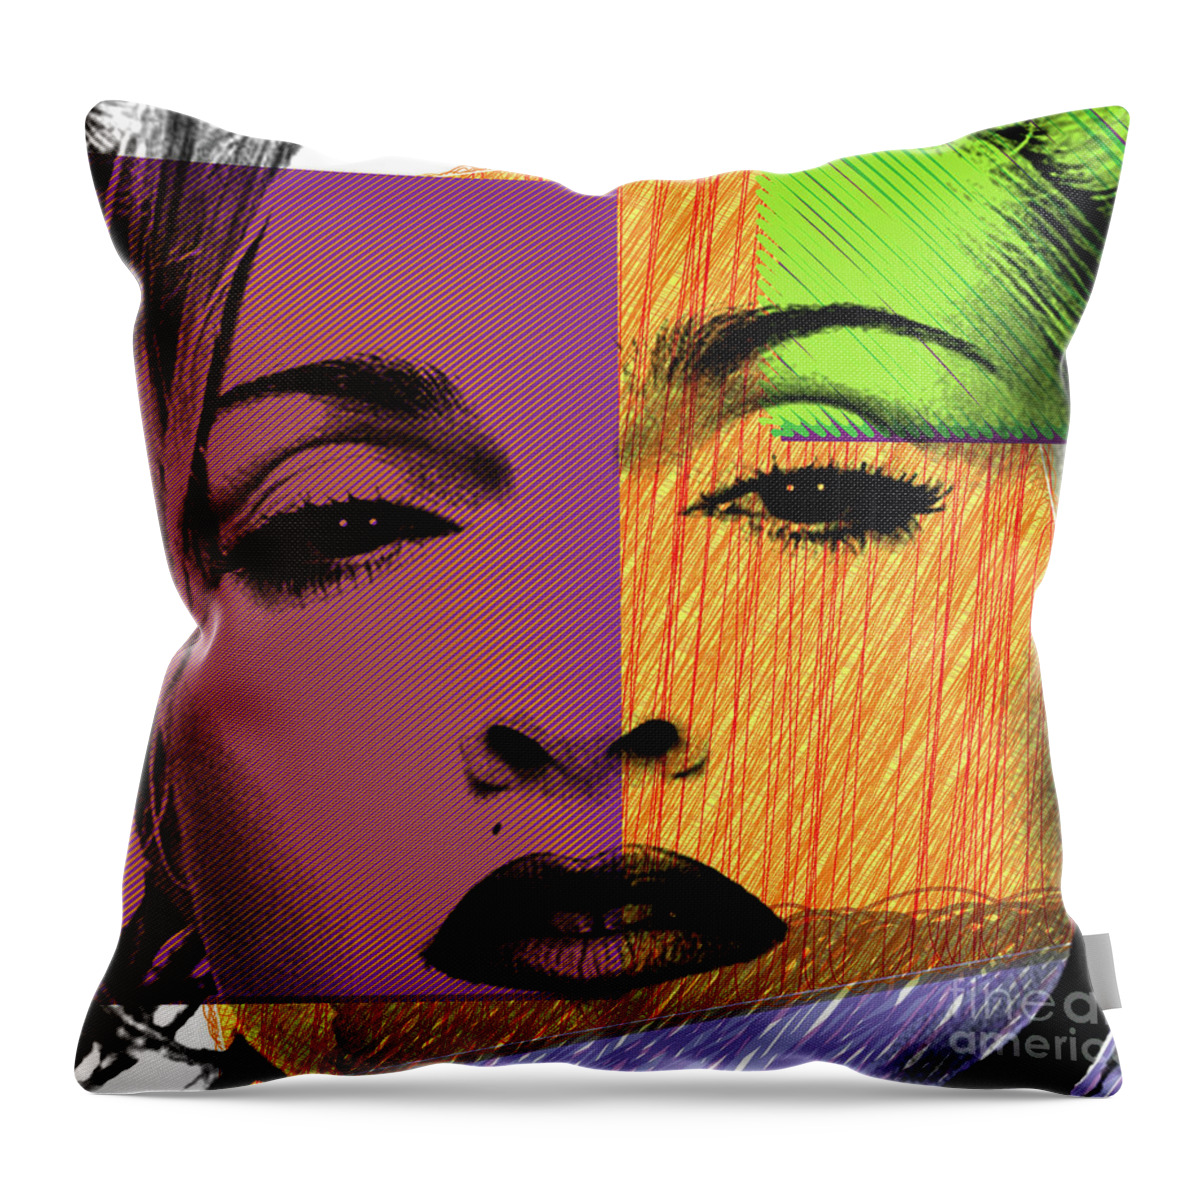 Madonna Throw Pillow featuring the digital art Madonna 1 by Mark Ashkenazi